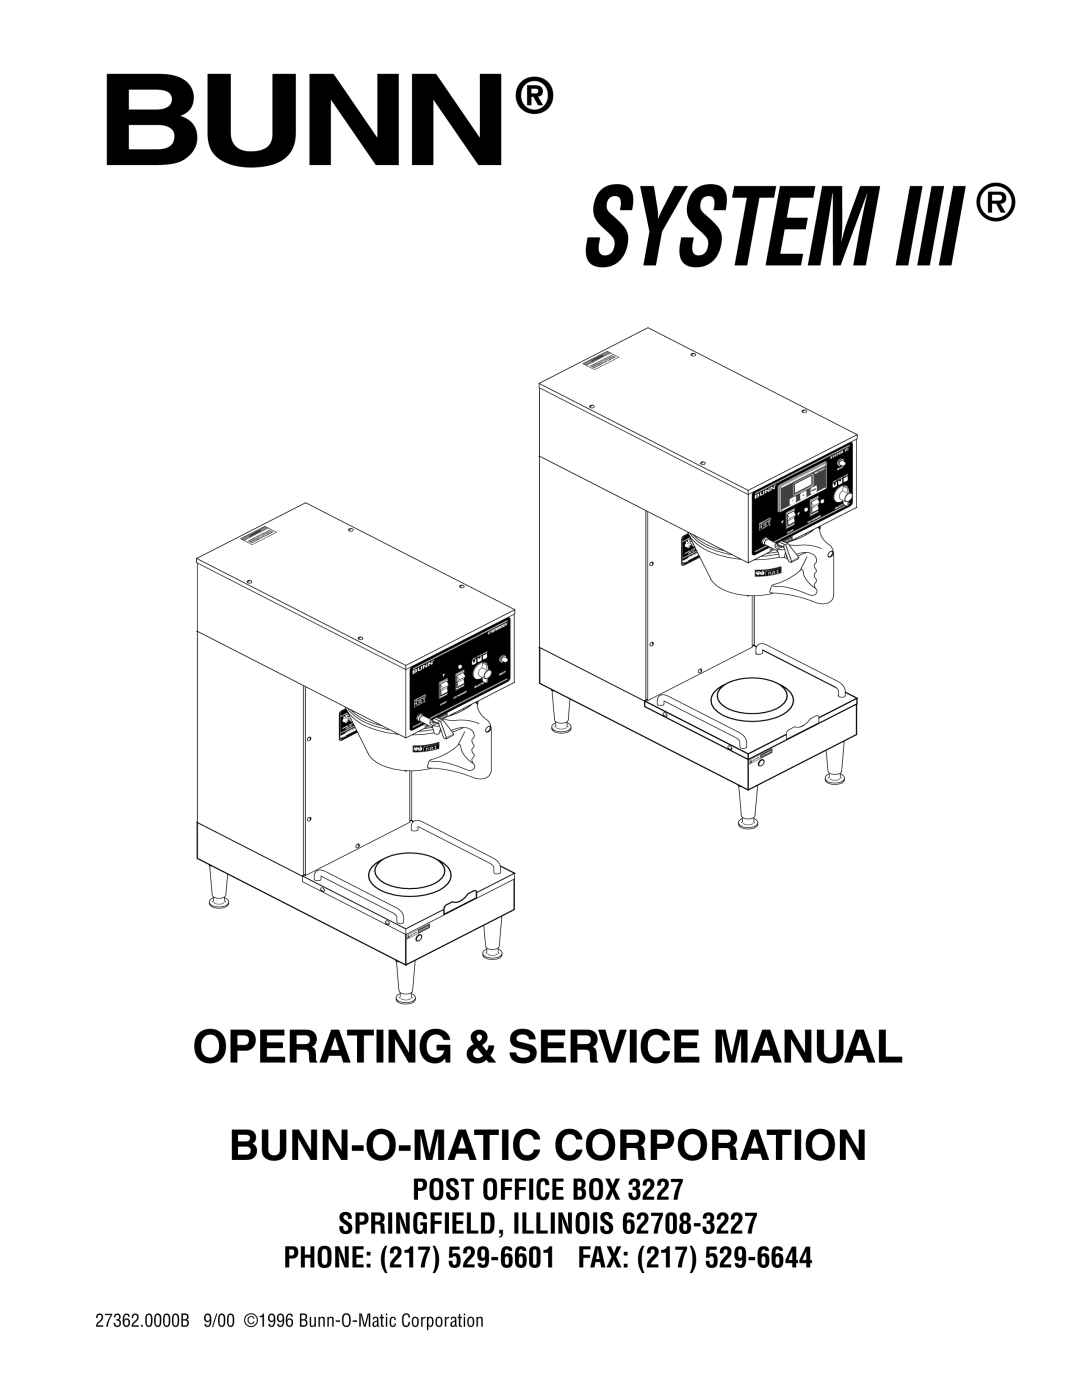 Bunn System III manual Operating & Service Manual, Bunn-O-Maticcorporation, Post Office Box Springfield, Illinois 